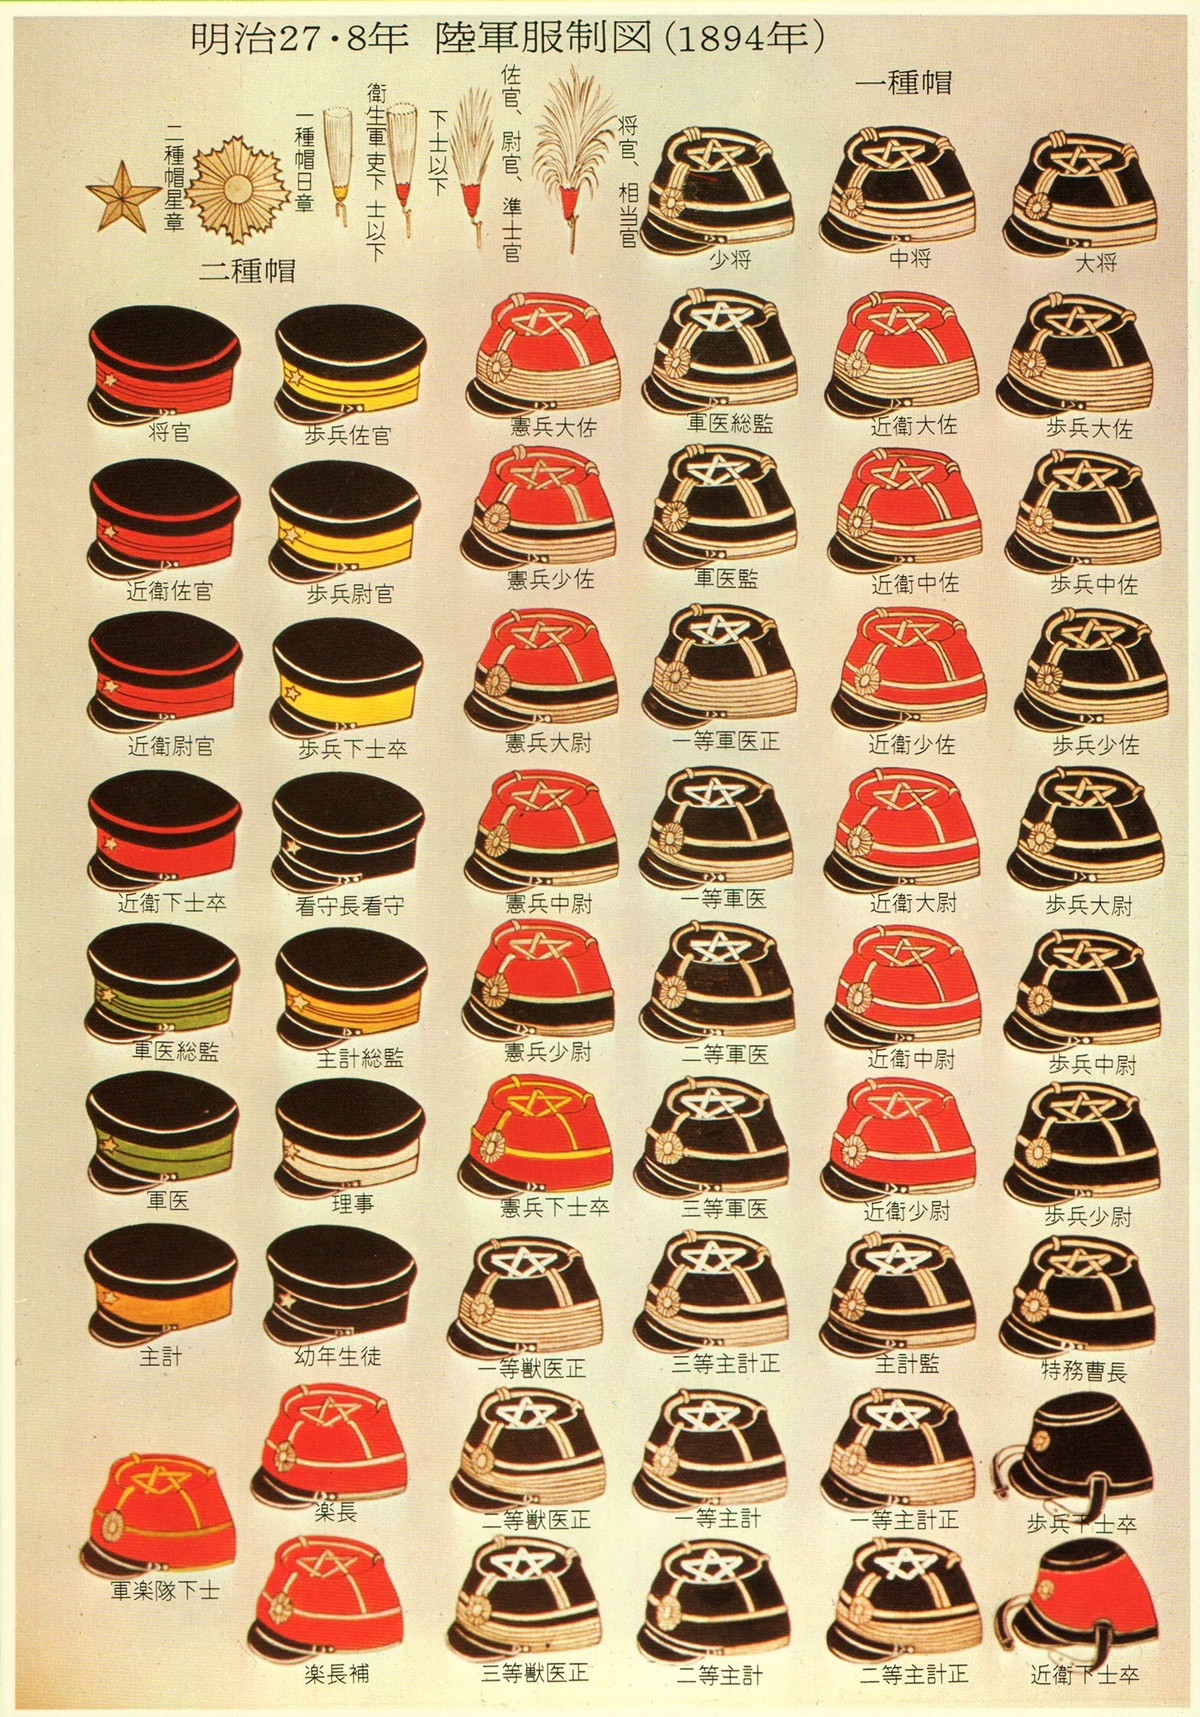 Japanese Imperial Army Uniform Plates 1894.jpg